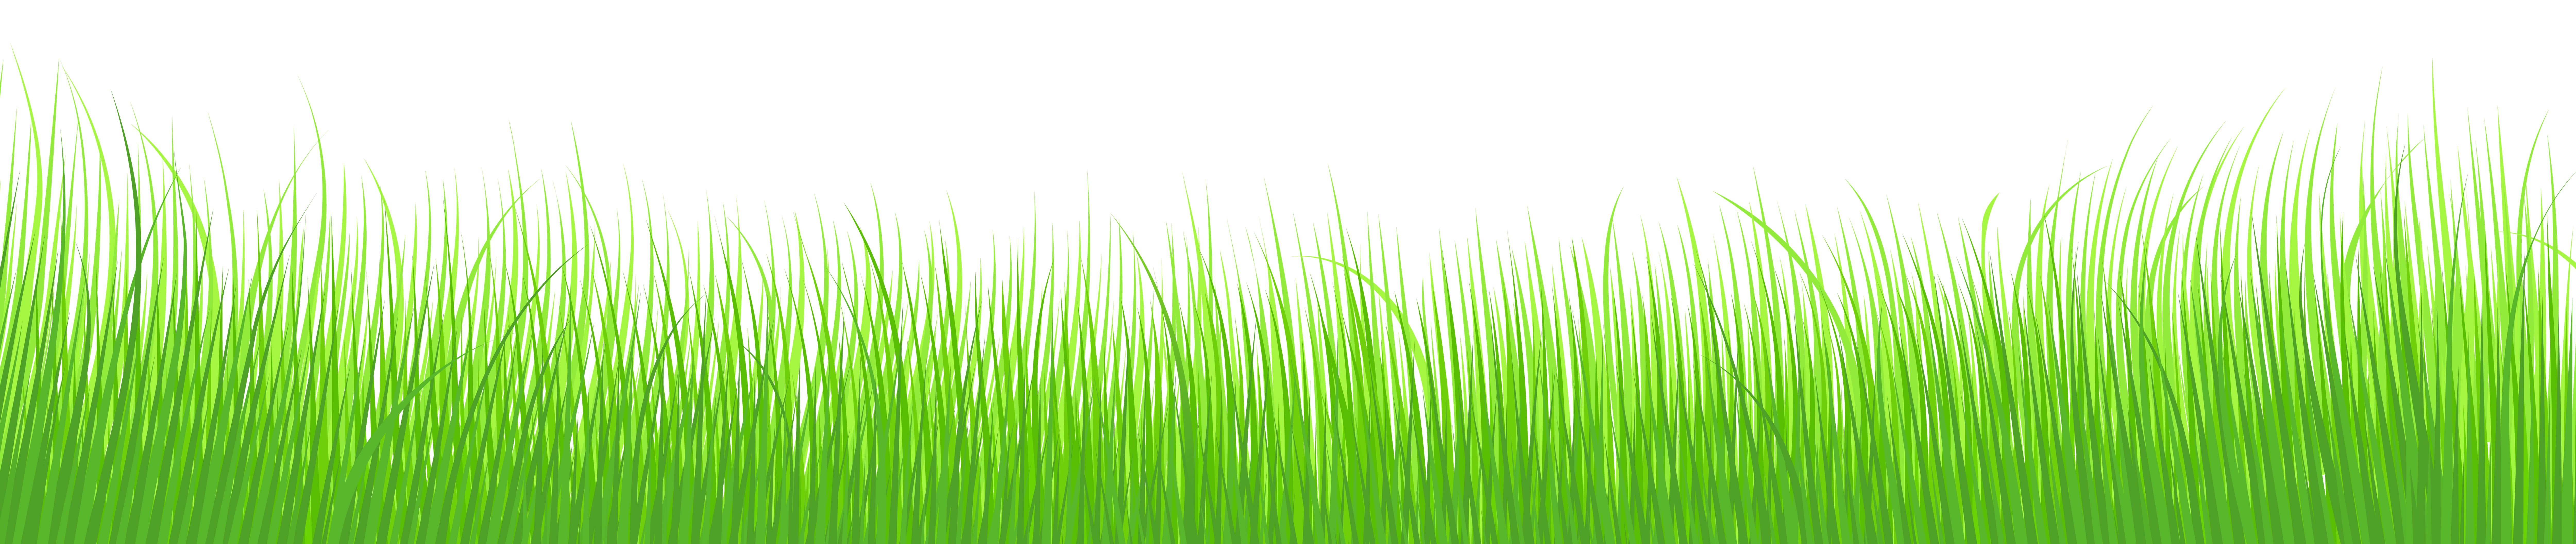 tall grass clipart free - photo #29